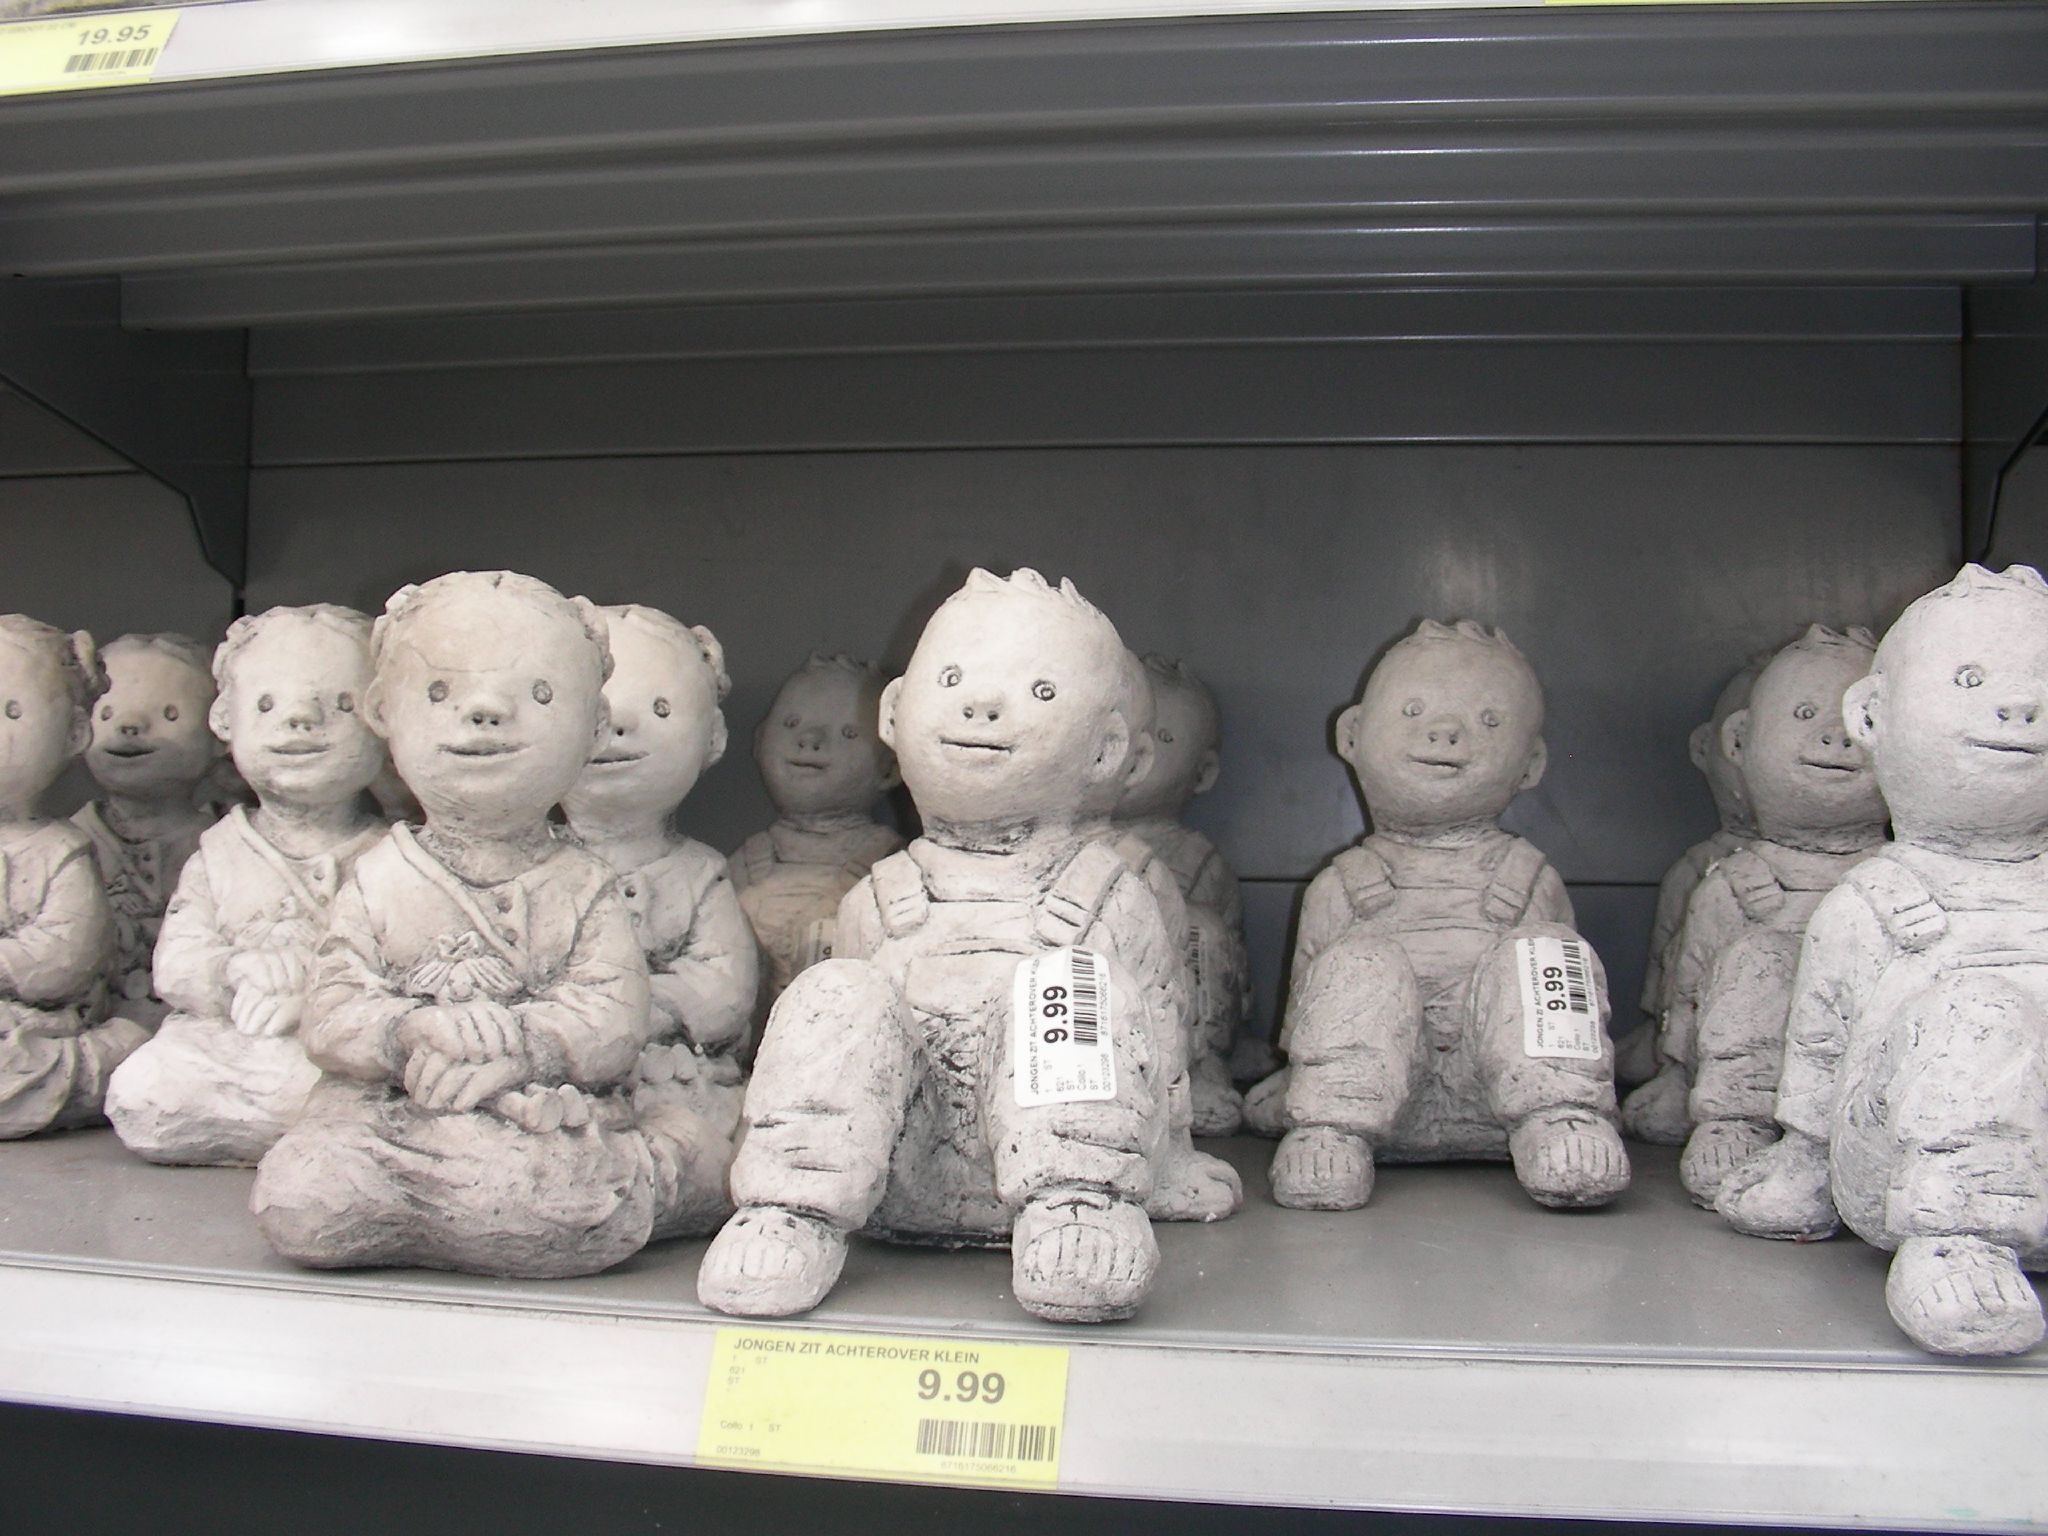 this is a display of vintage stuffed teddy bears